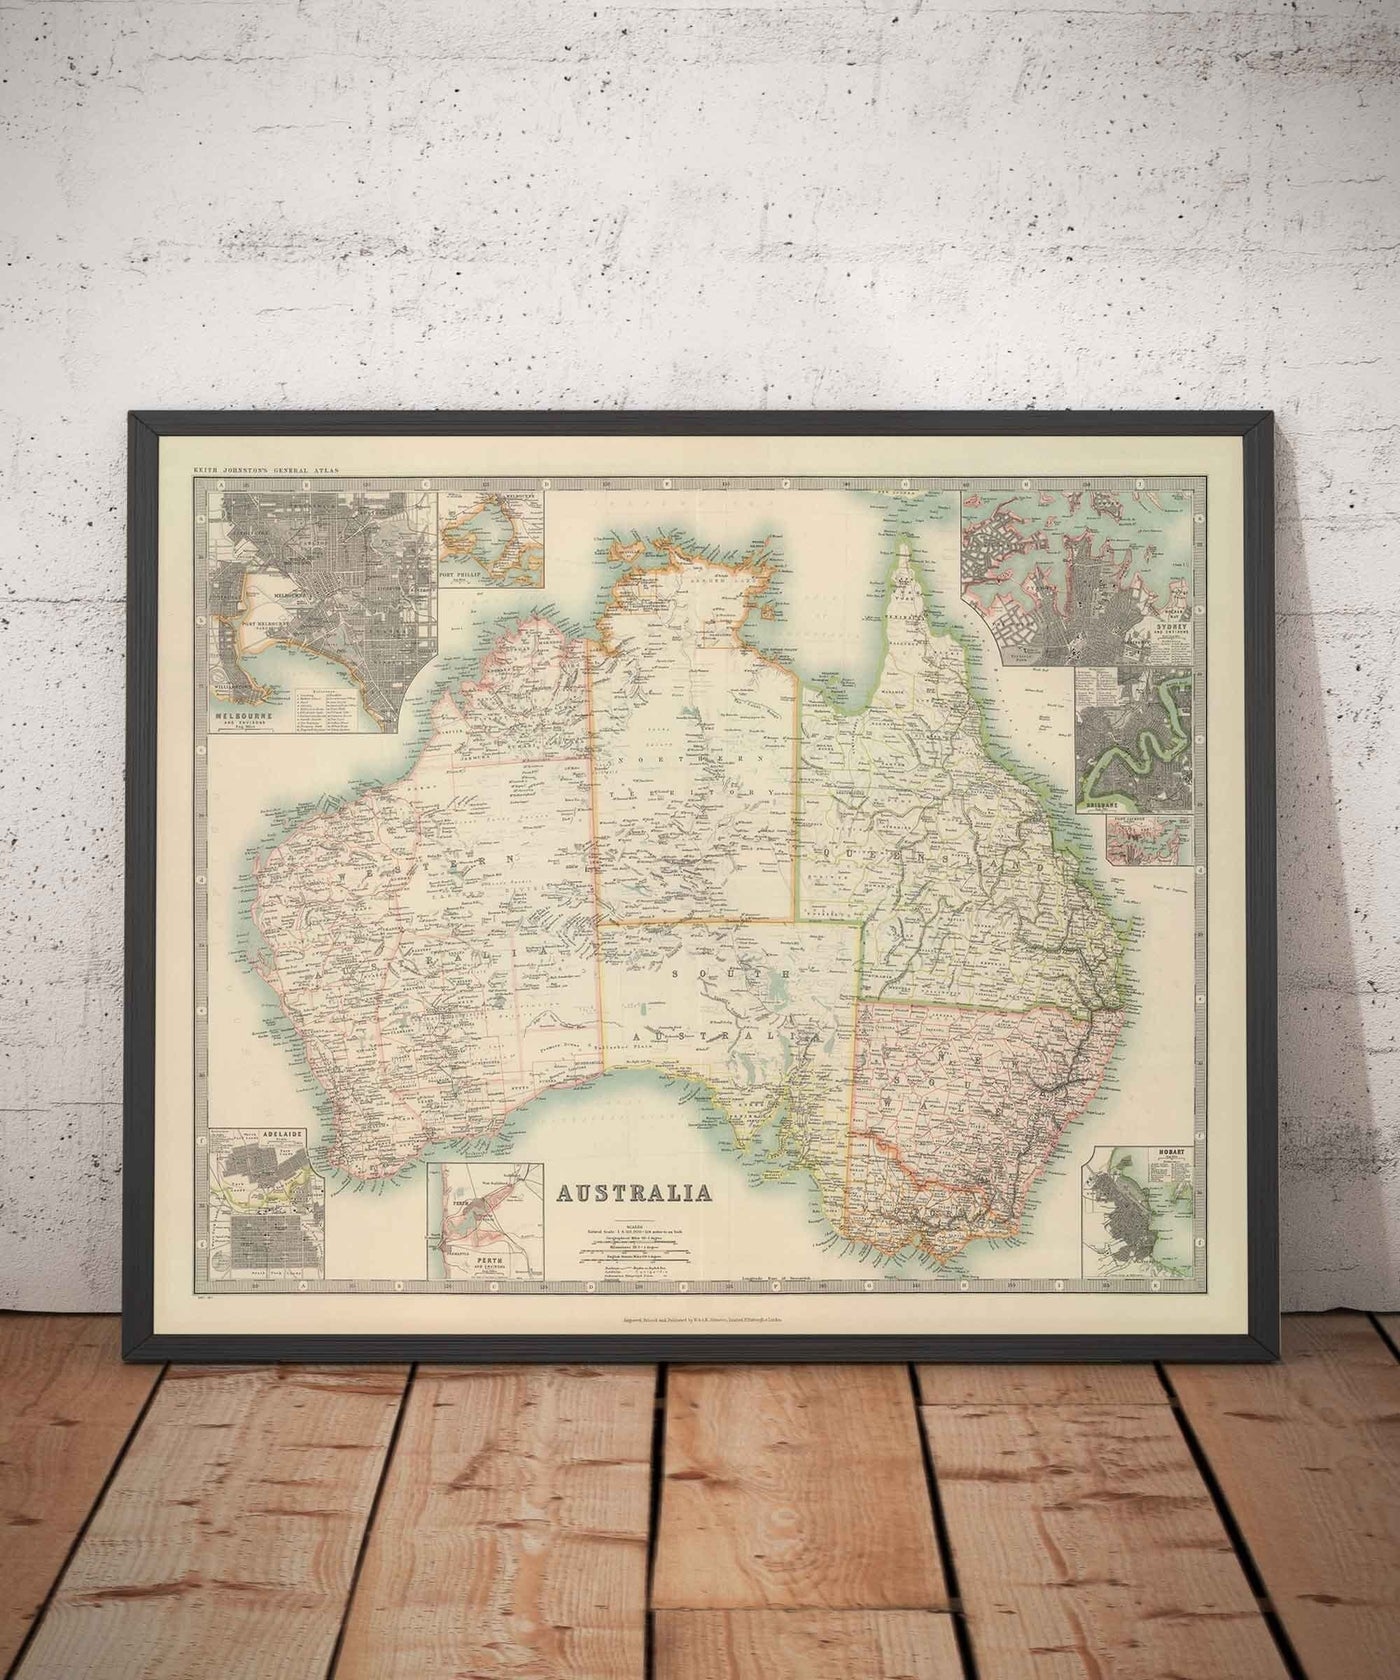 Old Map of Australia, 1911 by Johnston - NSW, Sydney, Queensland, Brisbane, Melbourne, Adelaide, Perth, Hobart